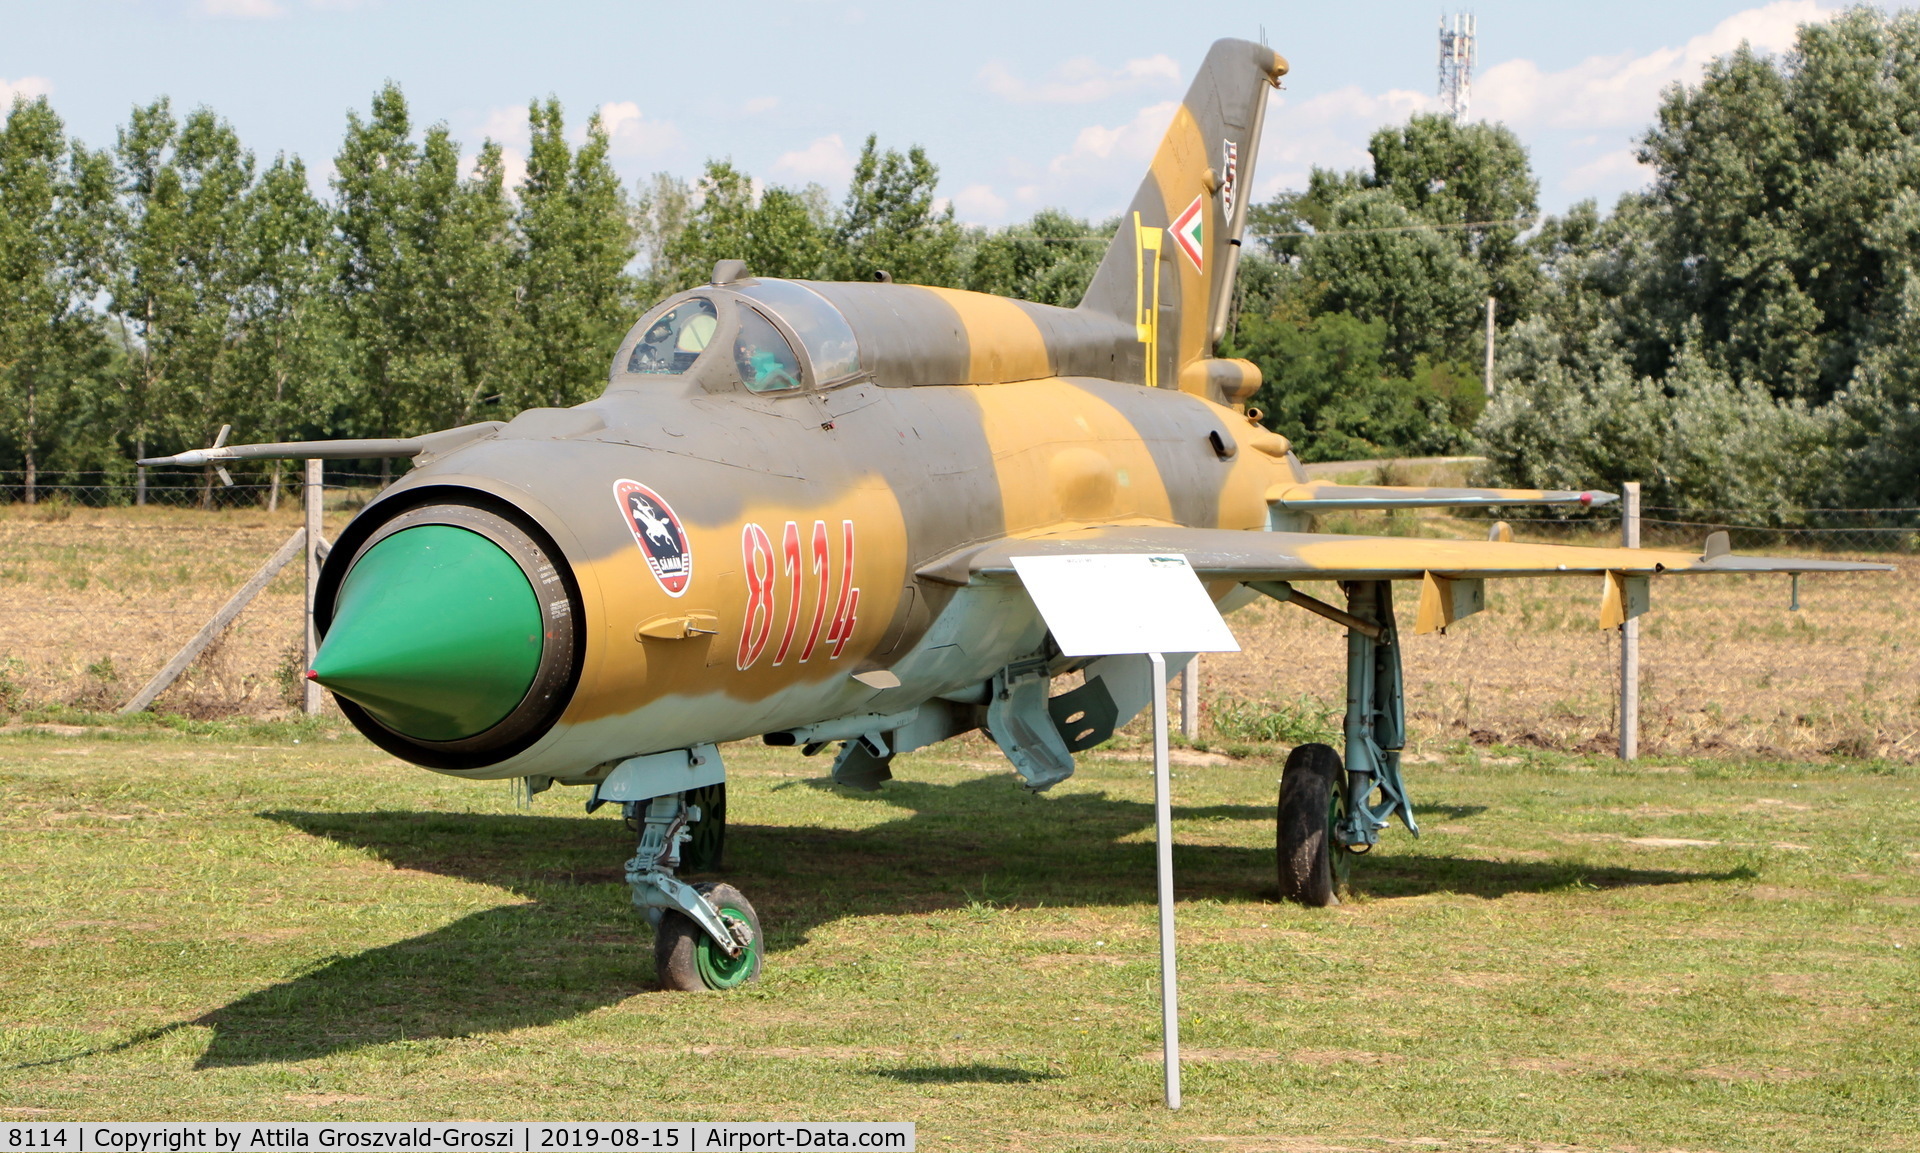 8114, Mikoyan-Gurevich MiG-21MF C/N 968114, Komo-Sky 51 Base, Dunavarsány, Hungary